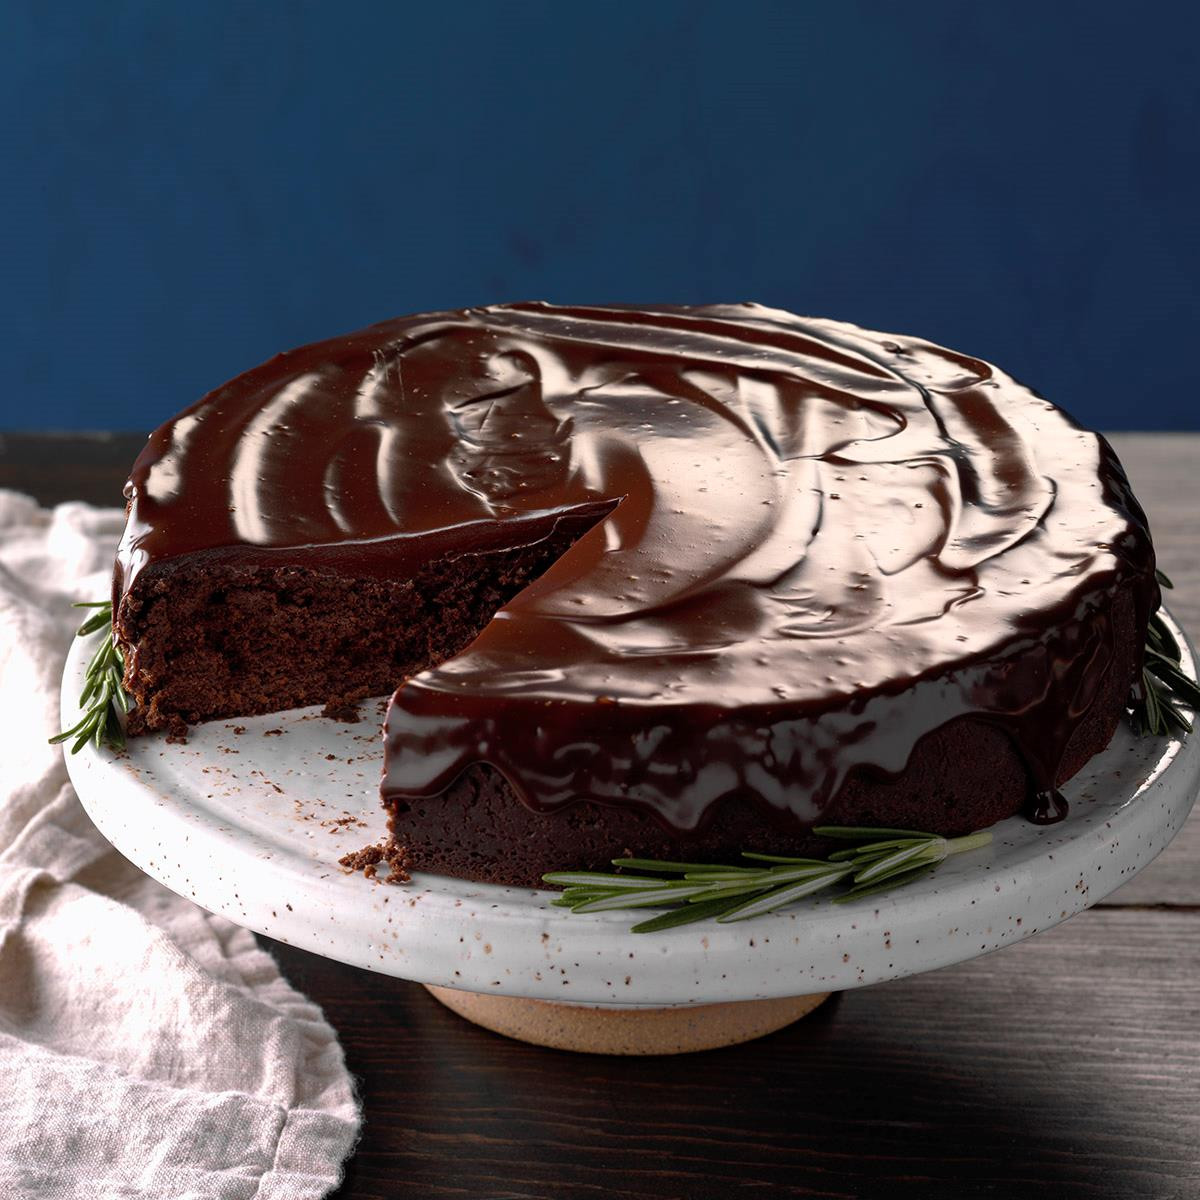 Taste Of Home Chocolate Cake
 Flourless Chocolate Cake with Rosemary Ganache Recipe